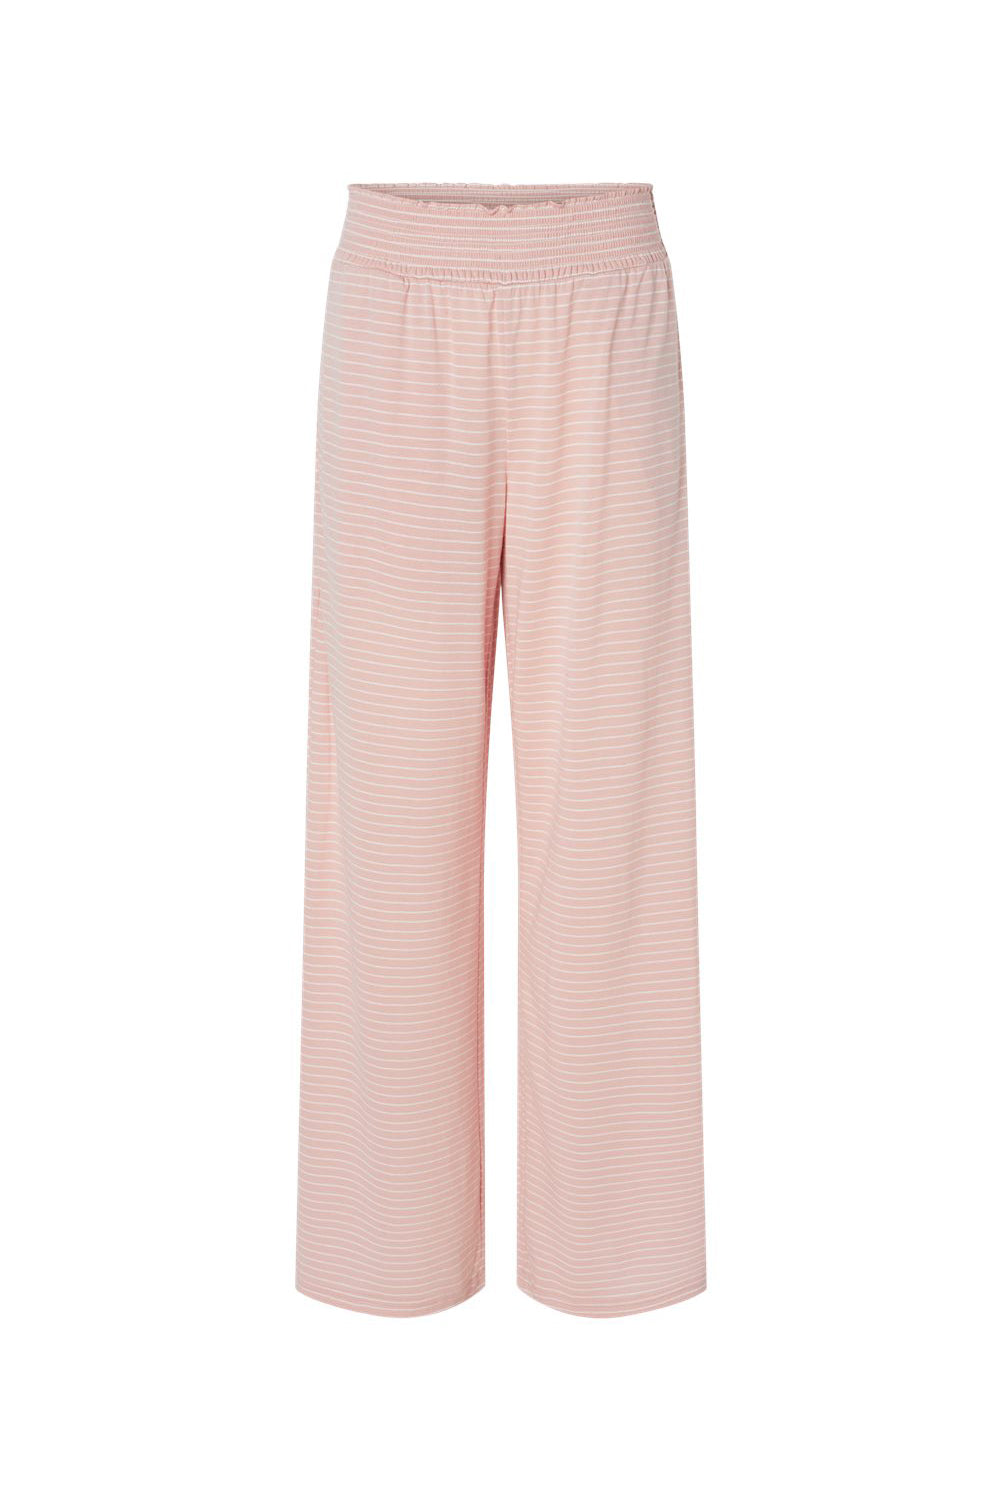 Boxercraft BW6615 Womens Evelyn Lounge Pants Blush Pink/White Flat Front